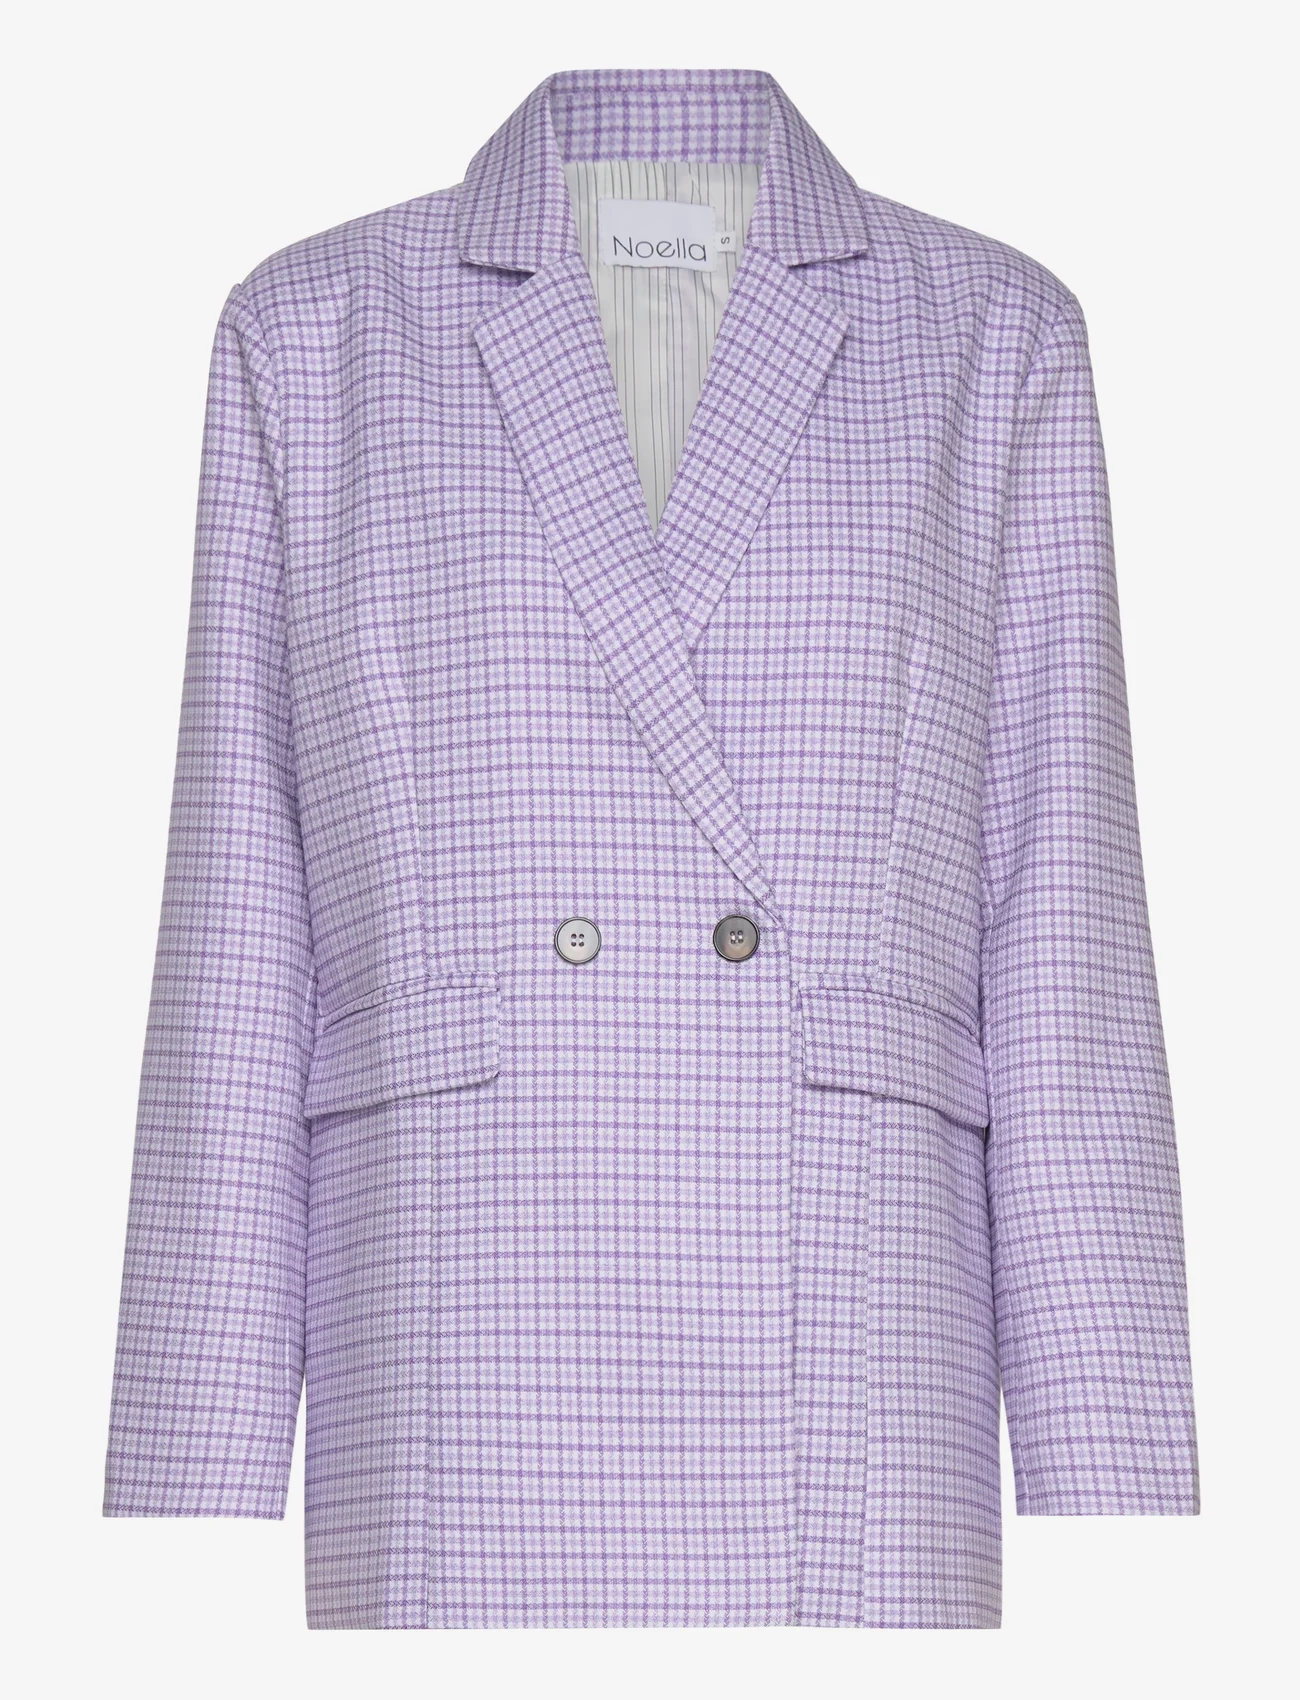 Noella - Mille Oversize Blazer - ballīšu apģērbs par outlet cenām - lavender check - 0